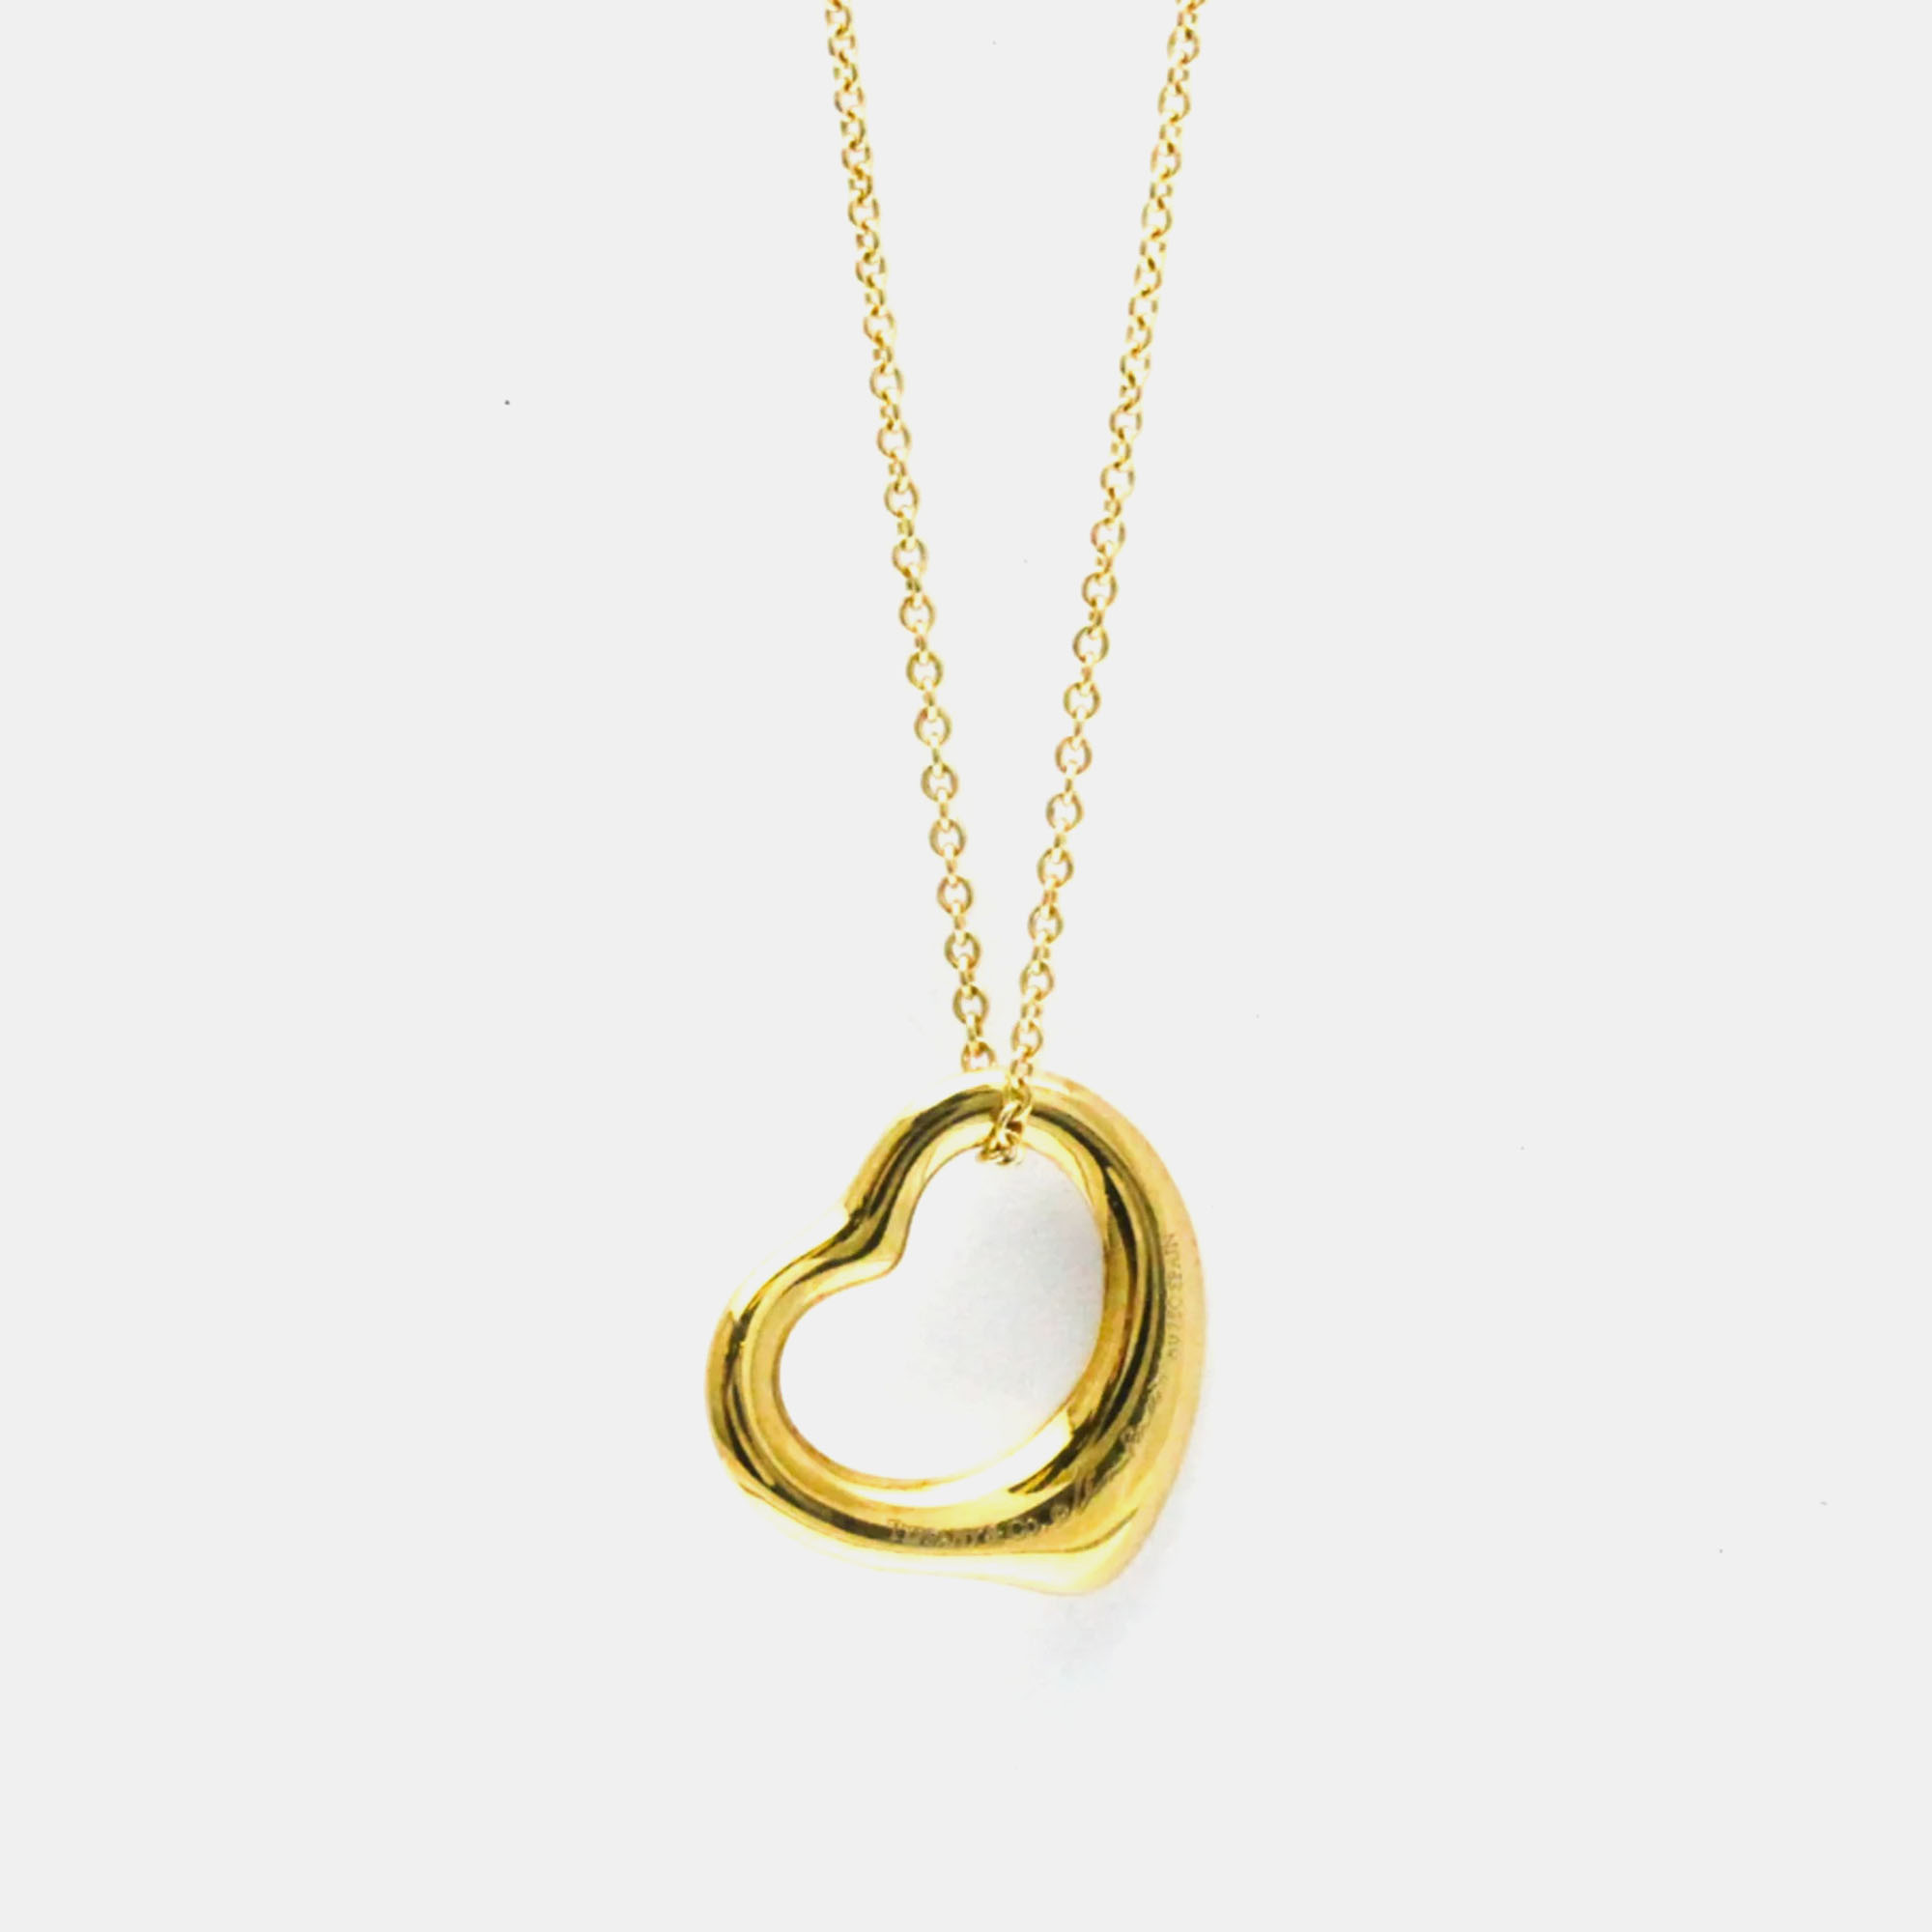 

Tiffany & Co. 18K Yellow Gold and Diamond Elsa Peretti Open Heart Pendant Necklace